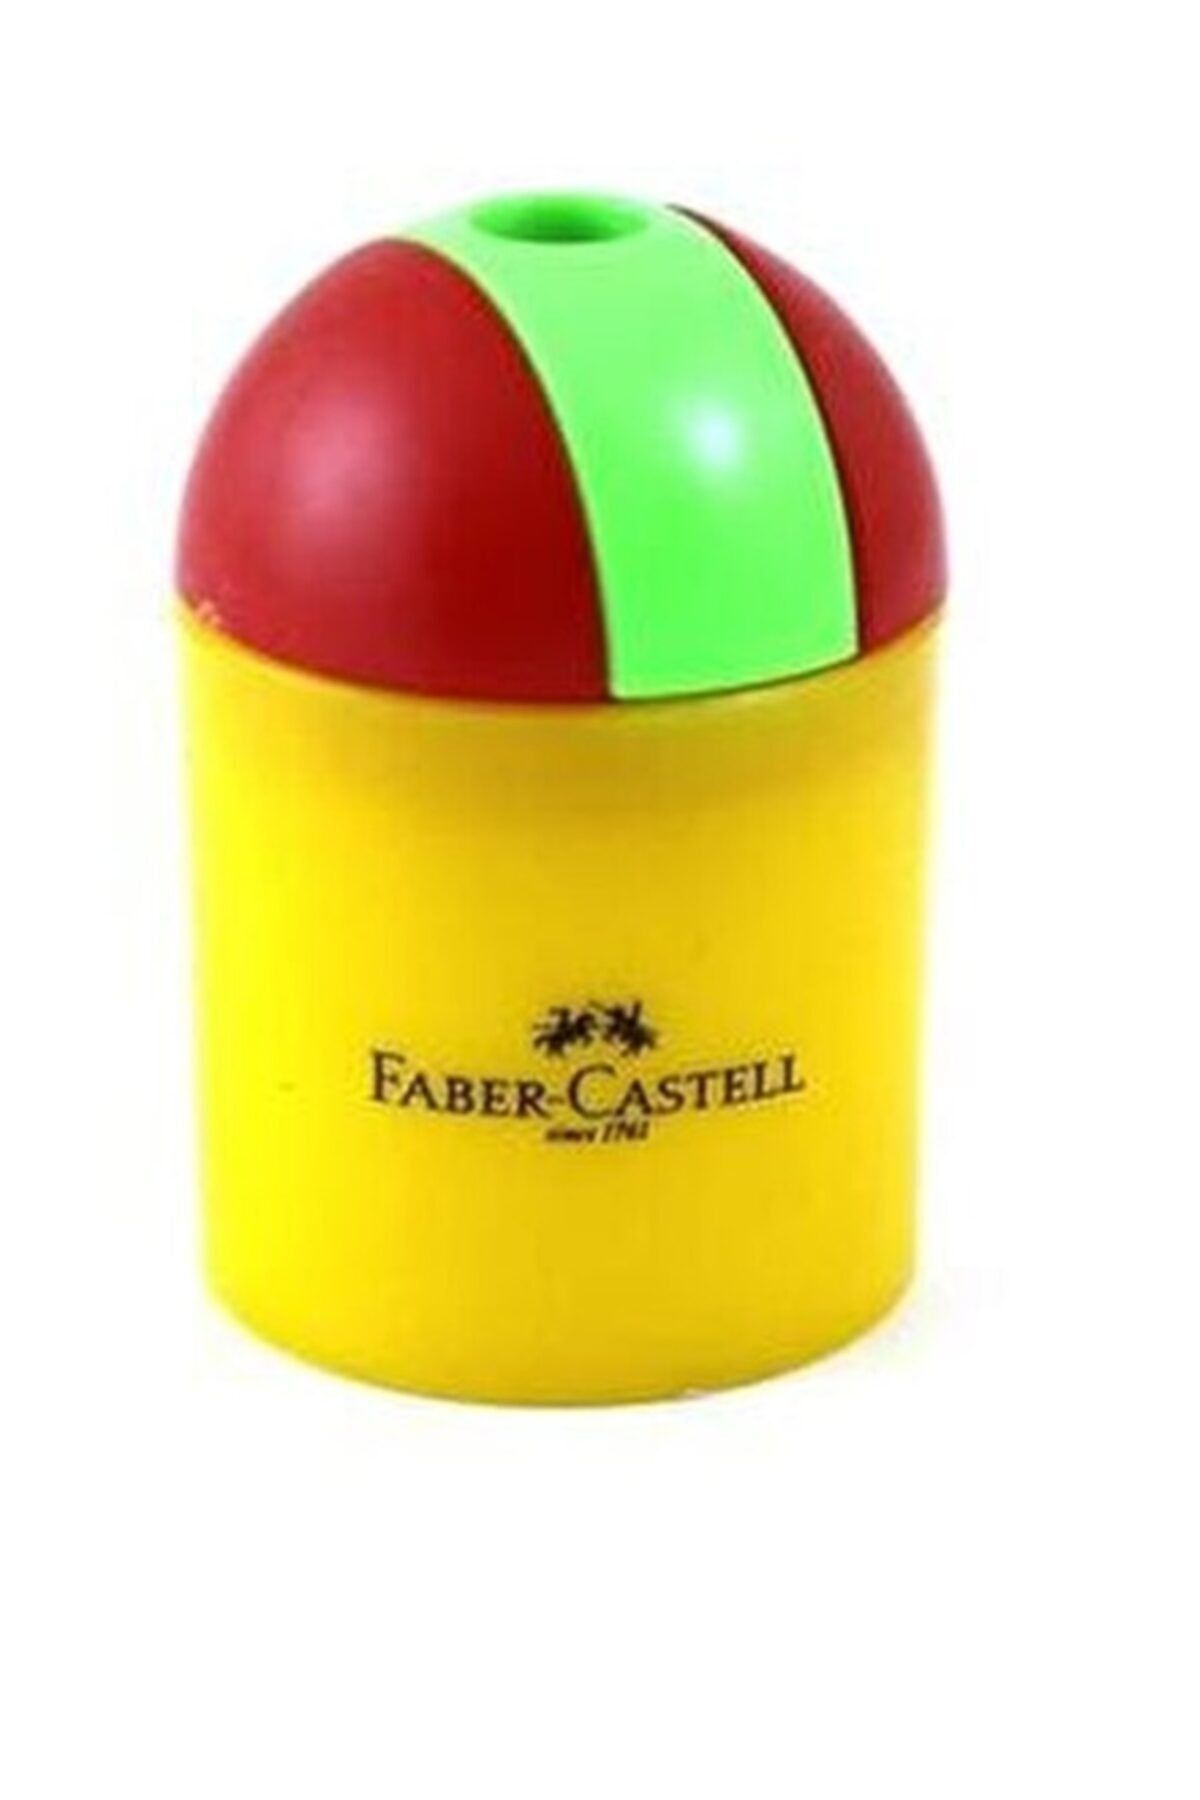 Faber Castell Faber-castell Kalemtraş Silindir, Sarı Modelli Renk, 1 Adet